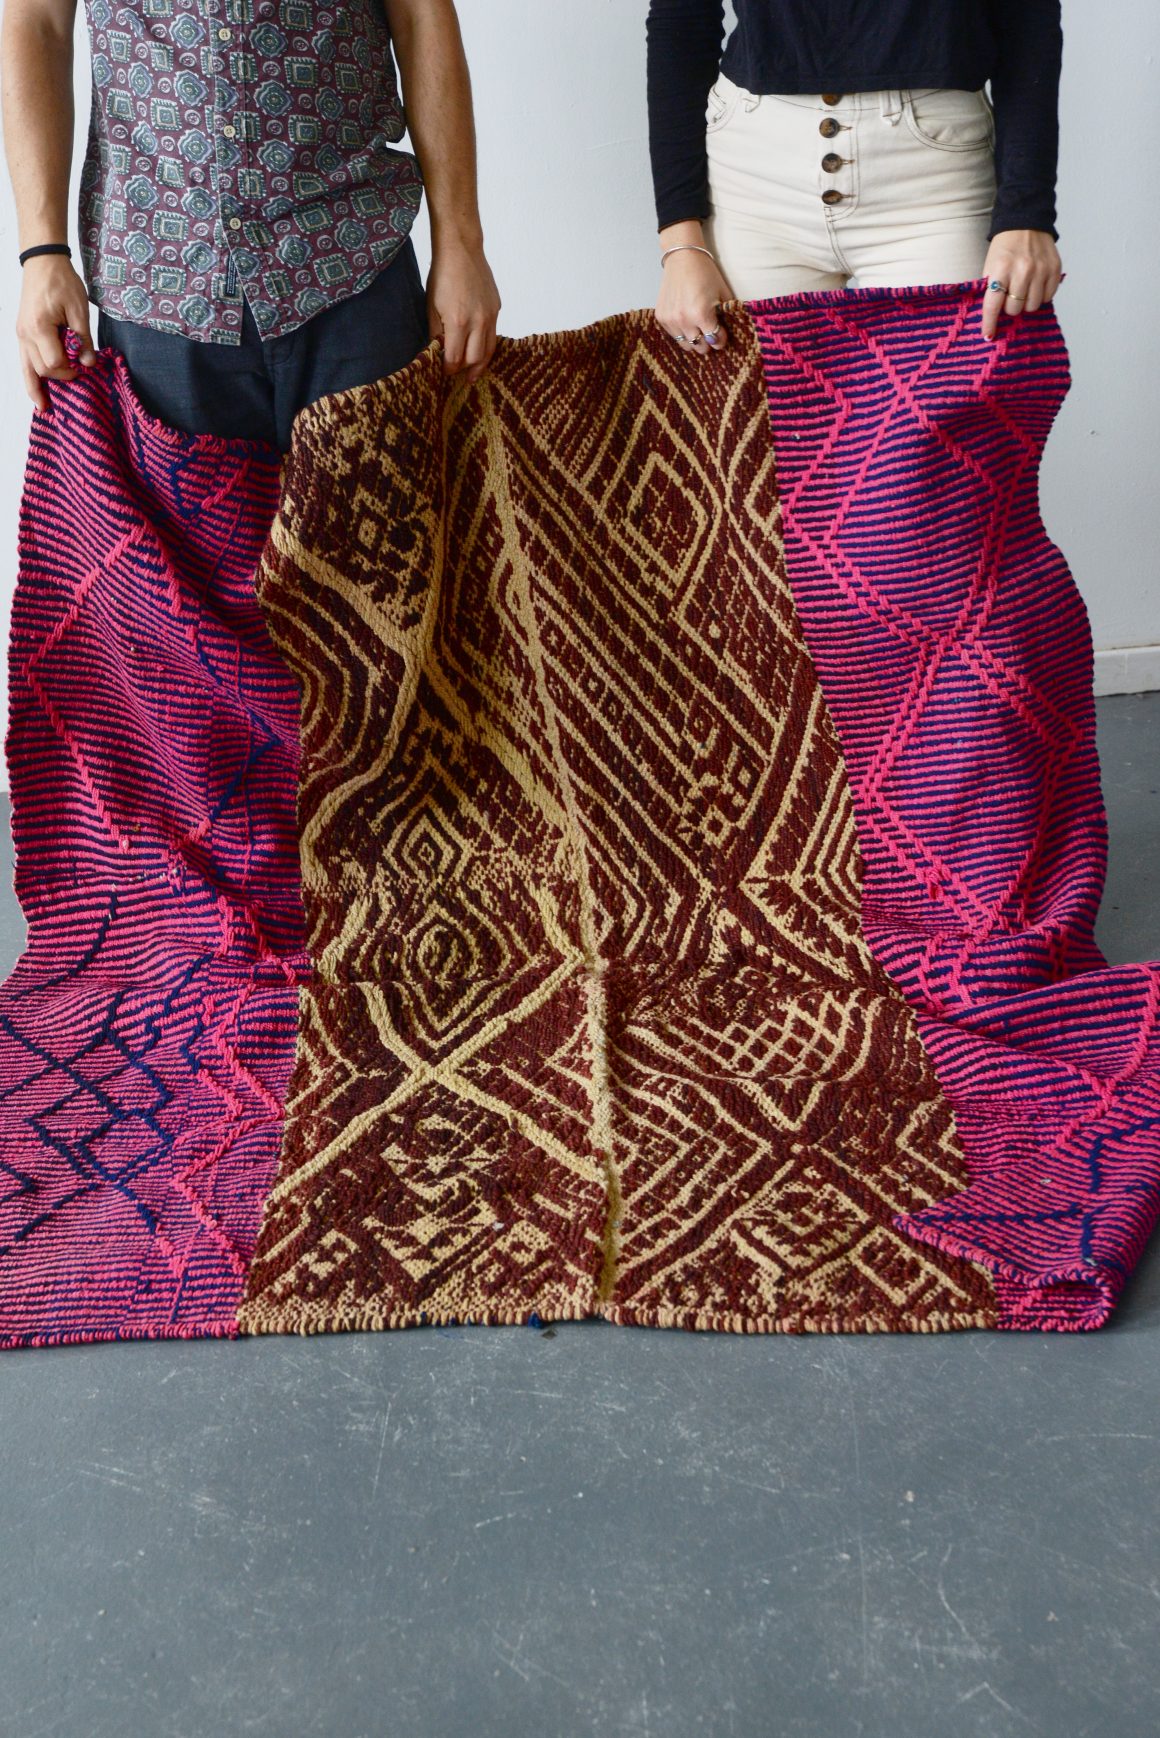 Woven Rosa - buy handmade artisan rugs by shopping small